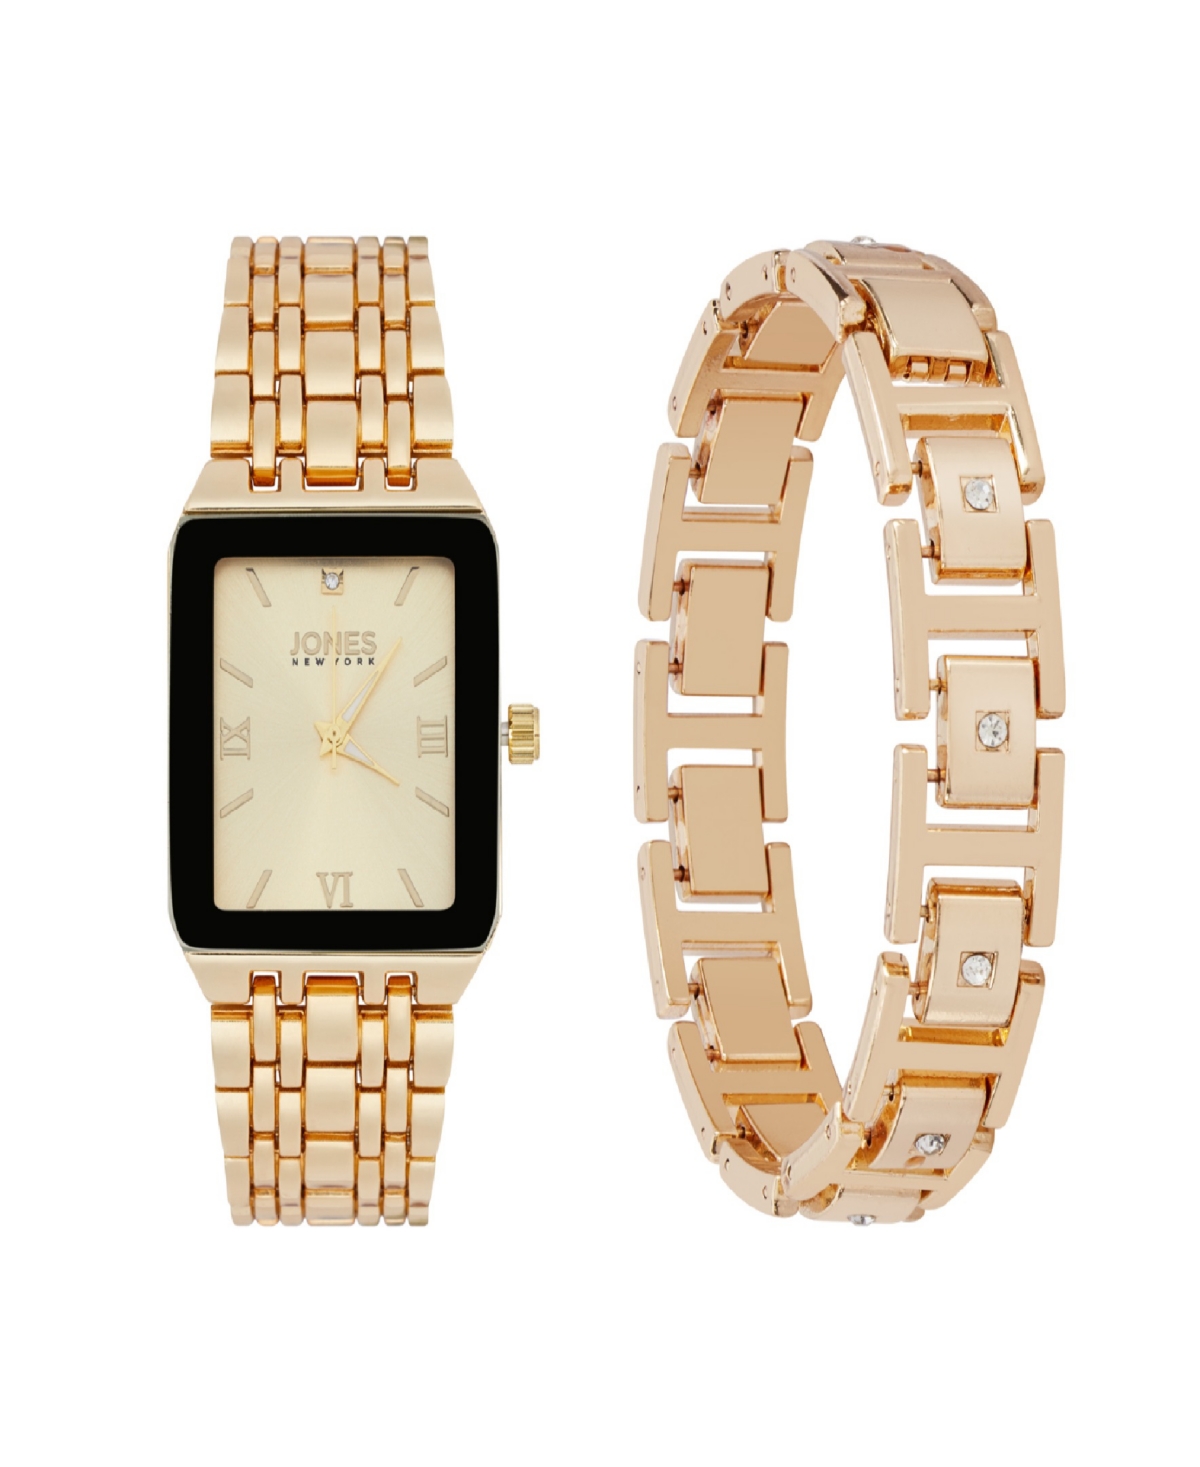 Men's Analog Shiny Gold-Tone Metal Watch 31mm Bracelet Gift Set - Champagne, Gold